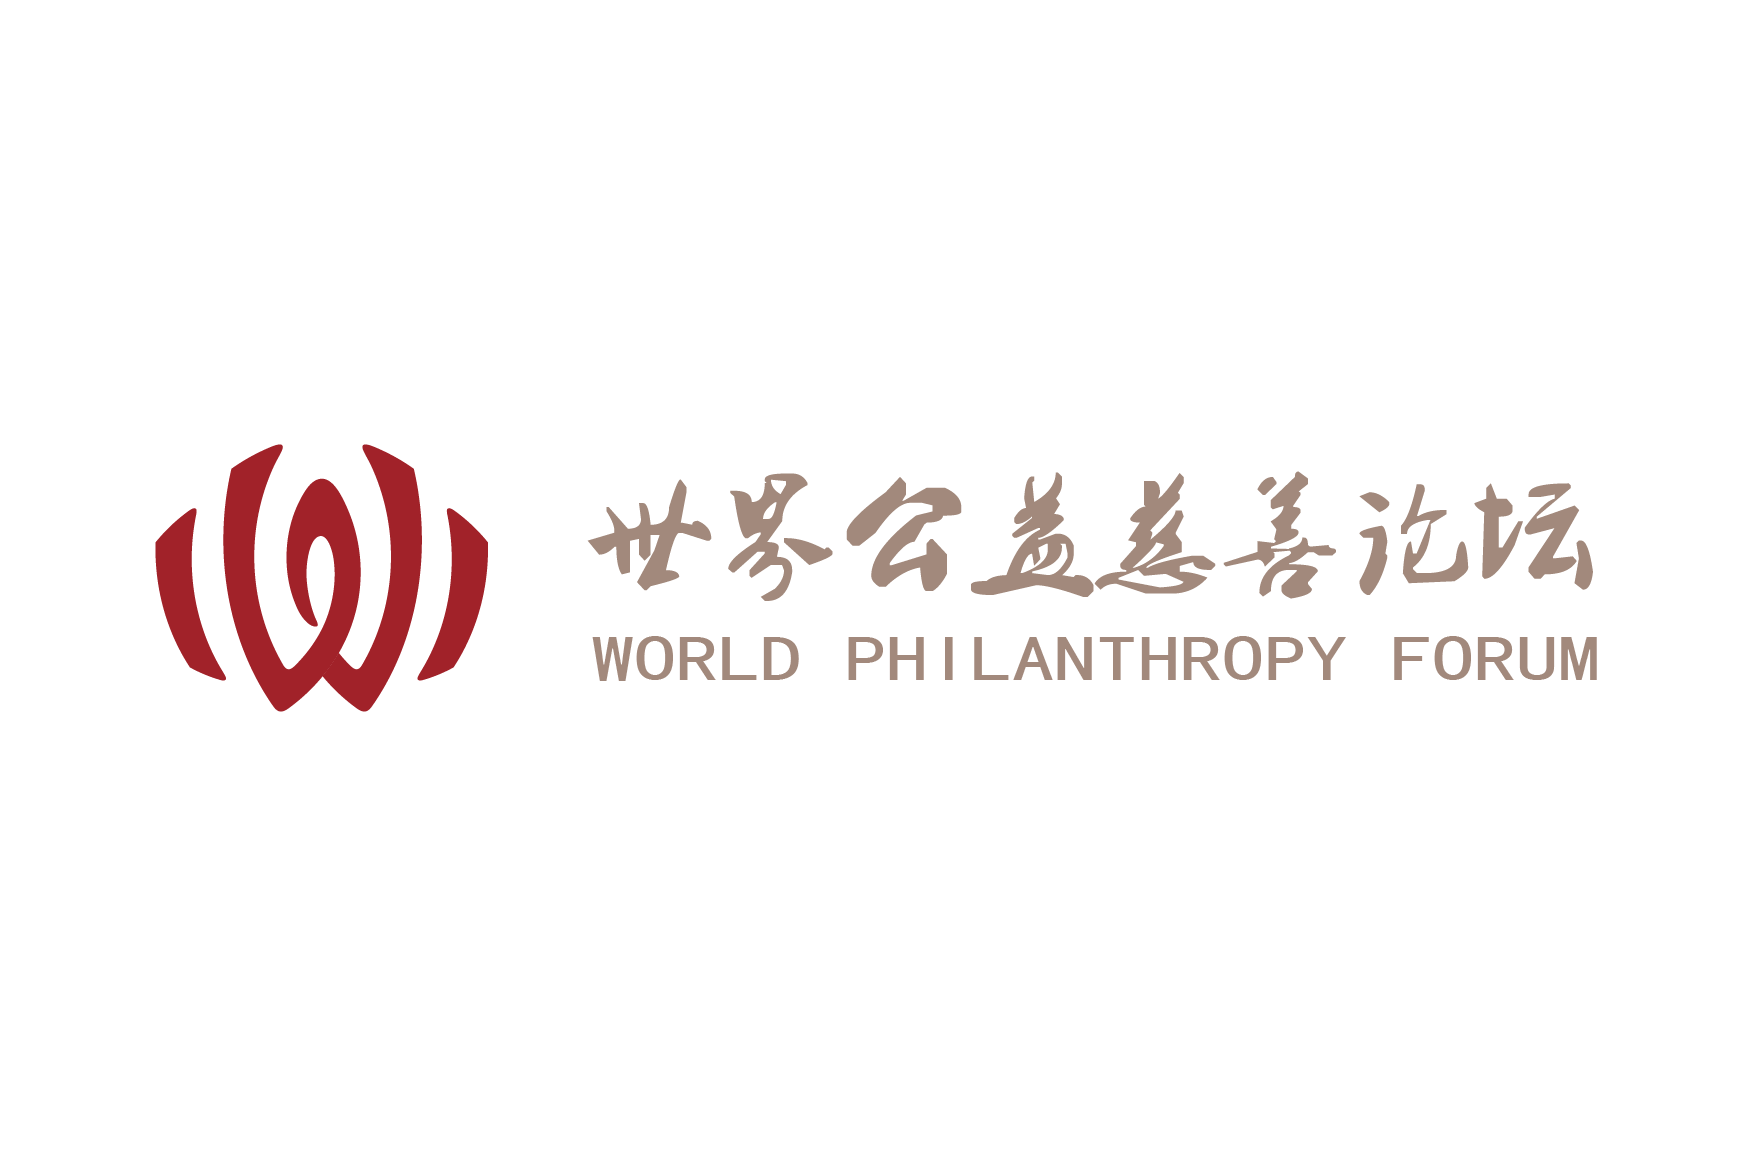 The 6th World Philanthropy Forum